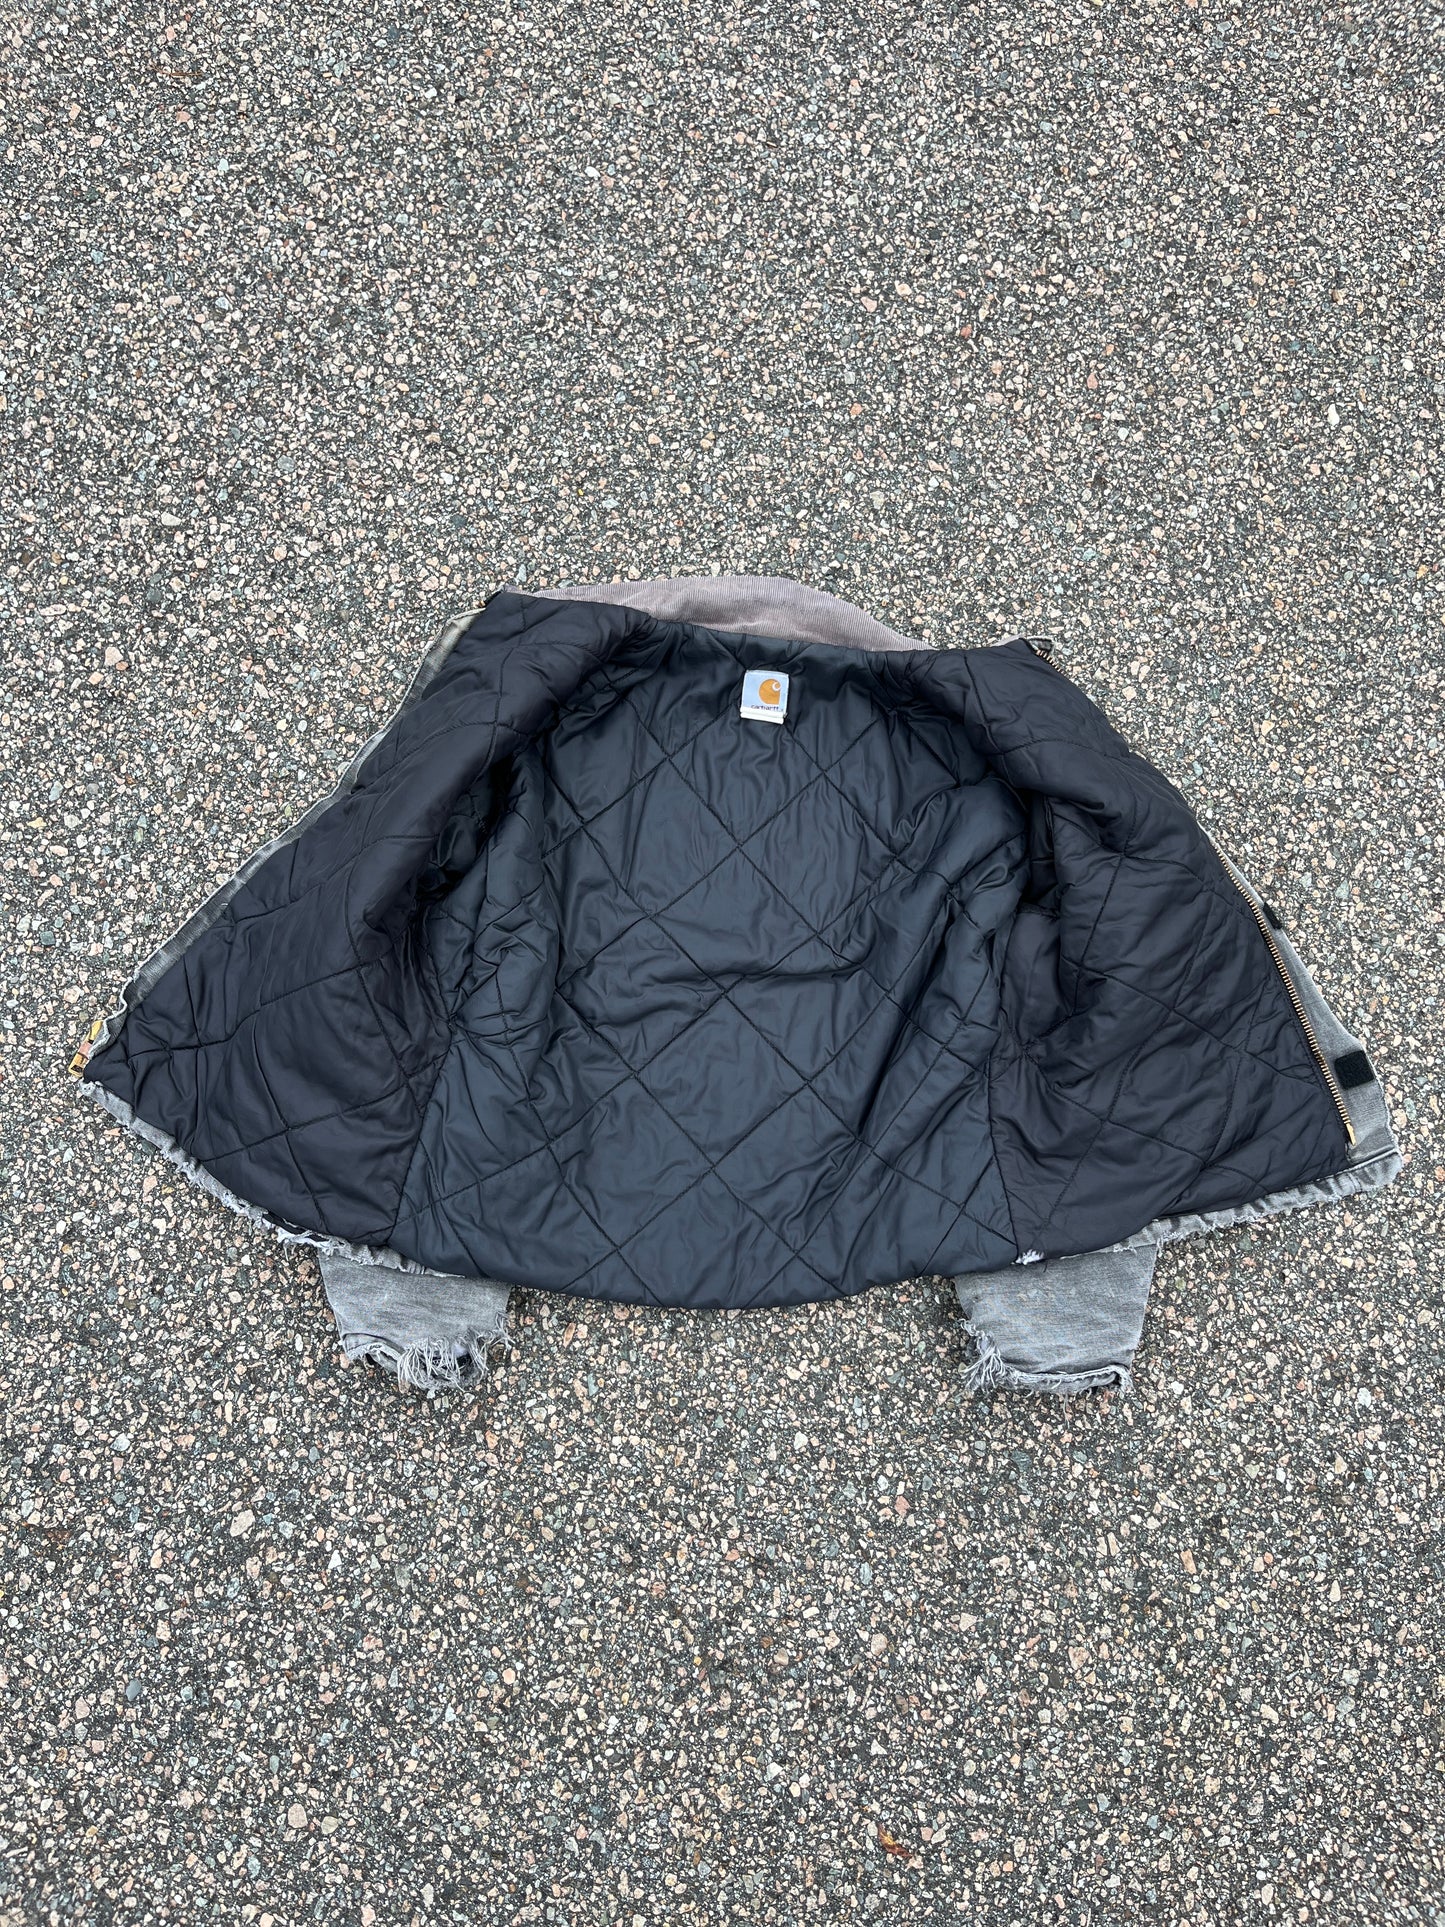 Faded n Distressed Black Carhartt Arctic Jacket - Medium